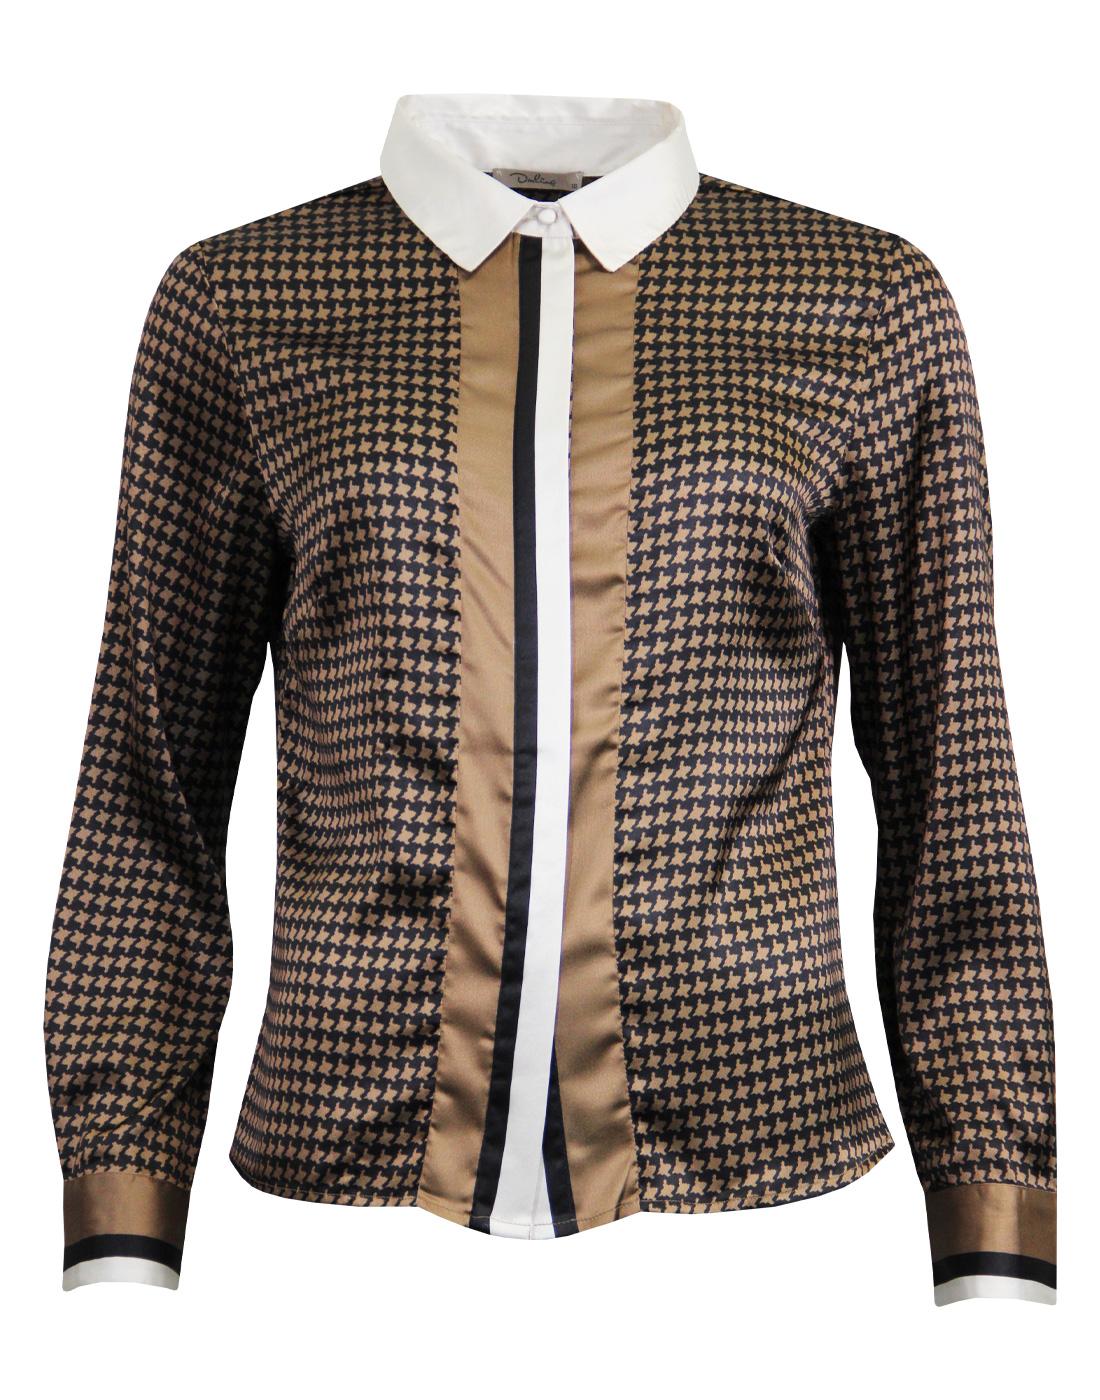 SOOKIE DARLING 60s Mod Dogtooth Stripe Panel Shirt